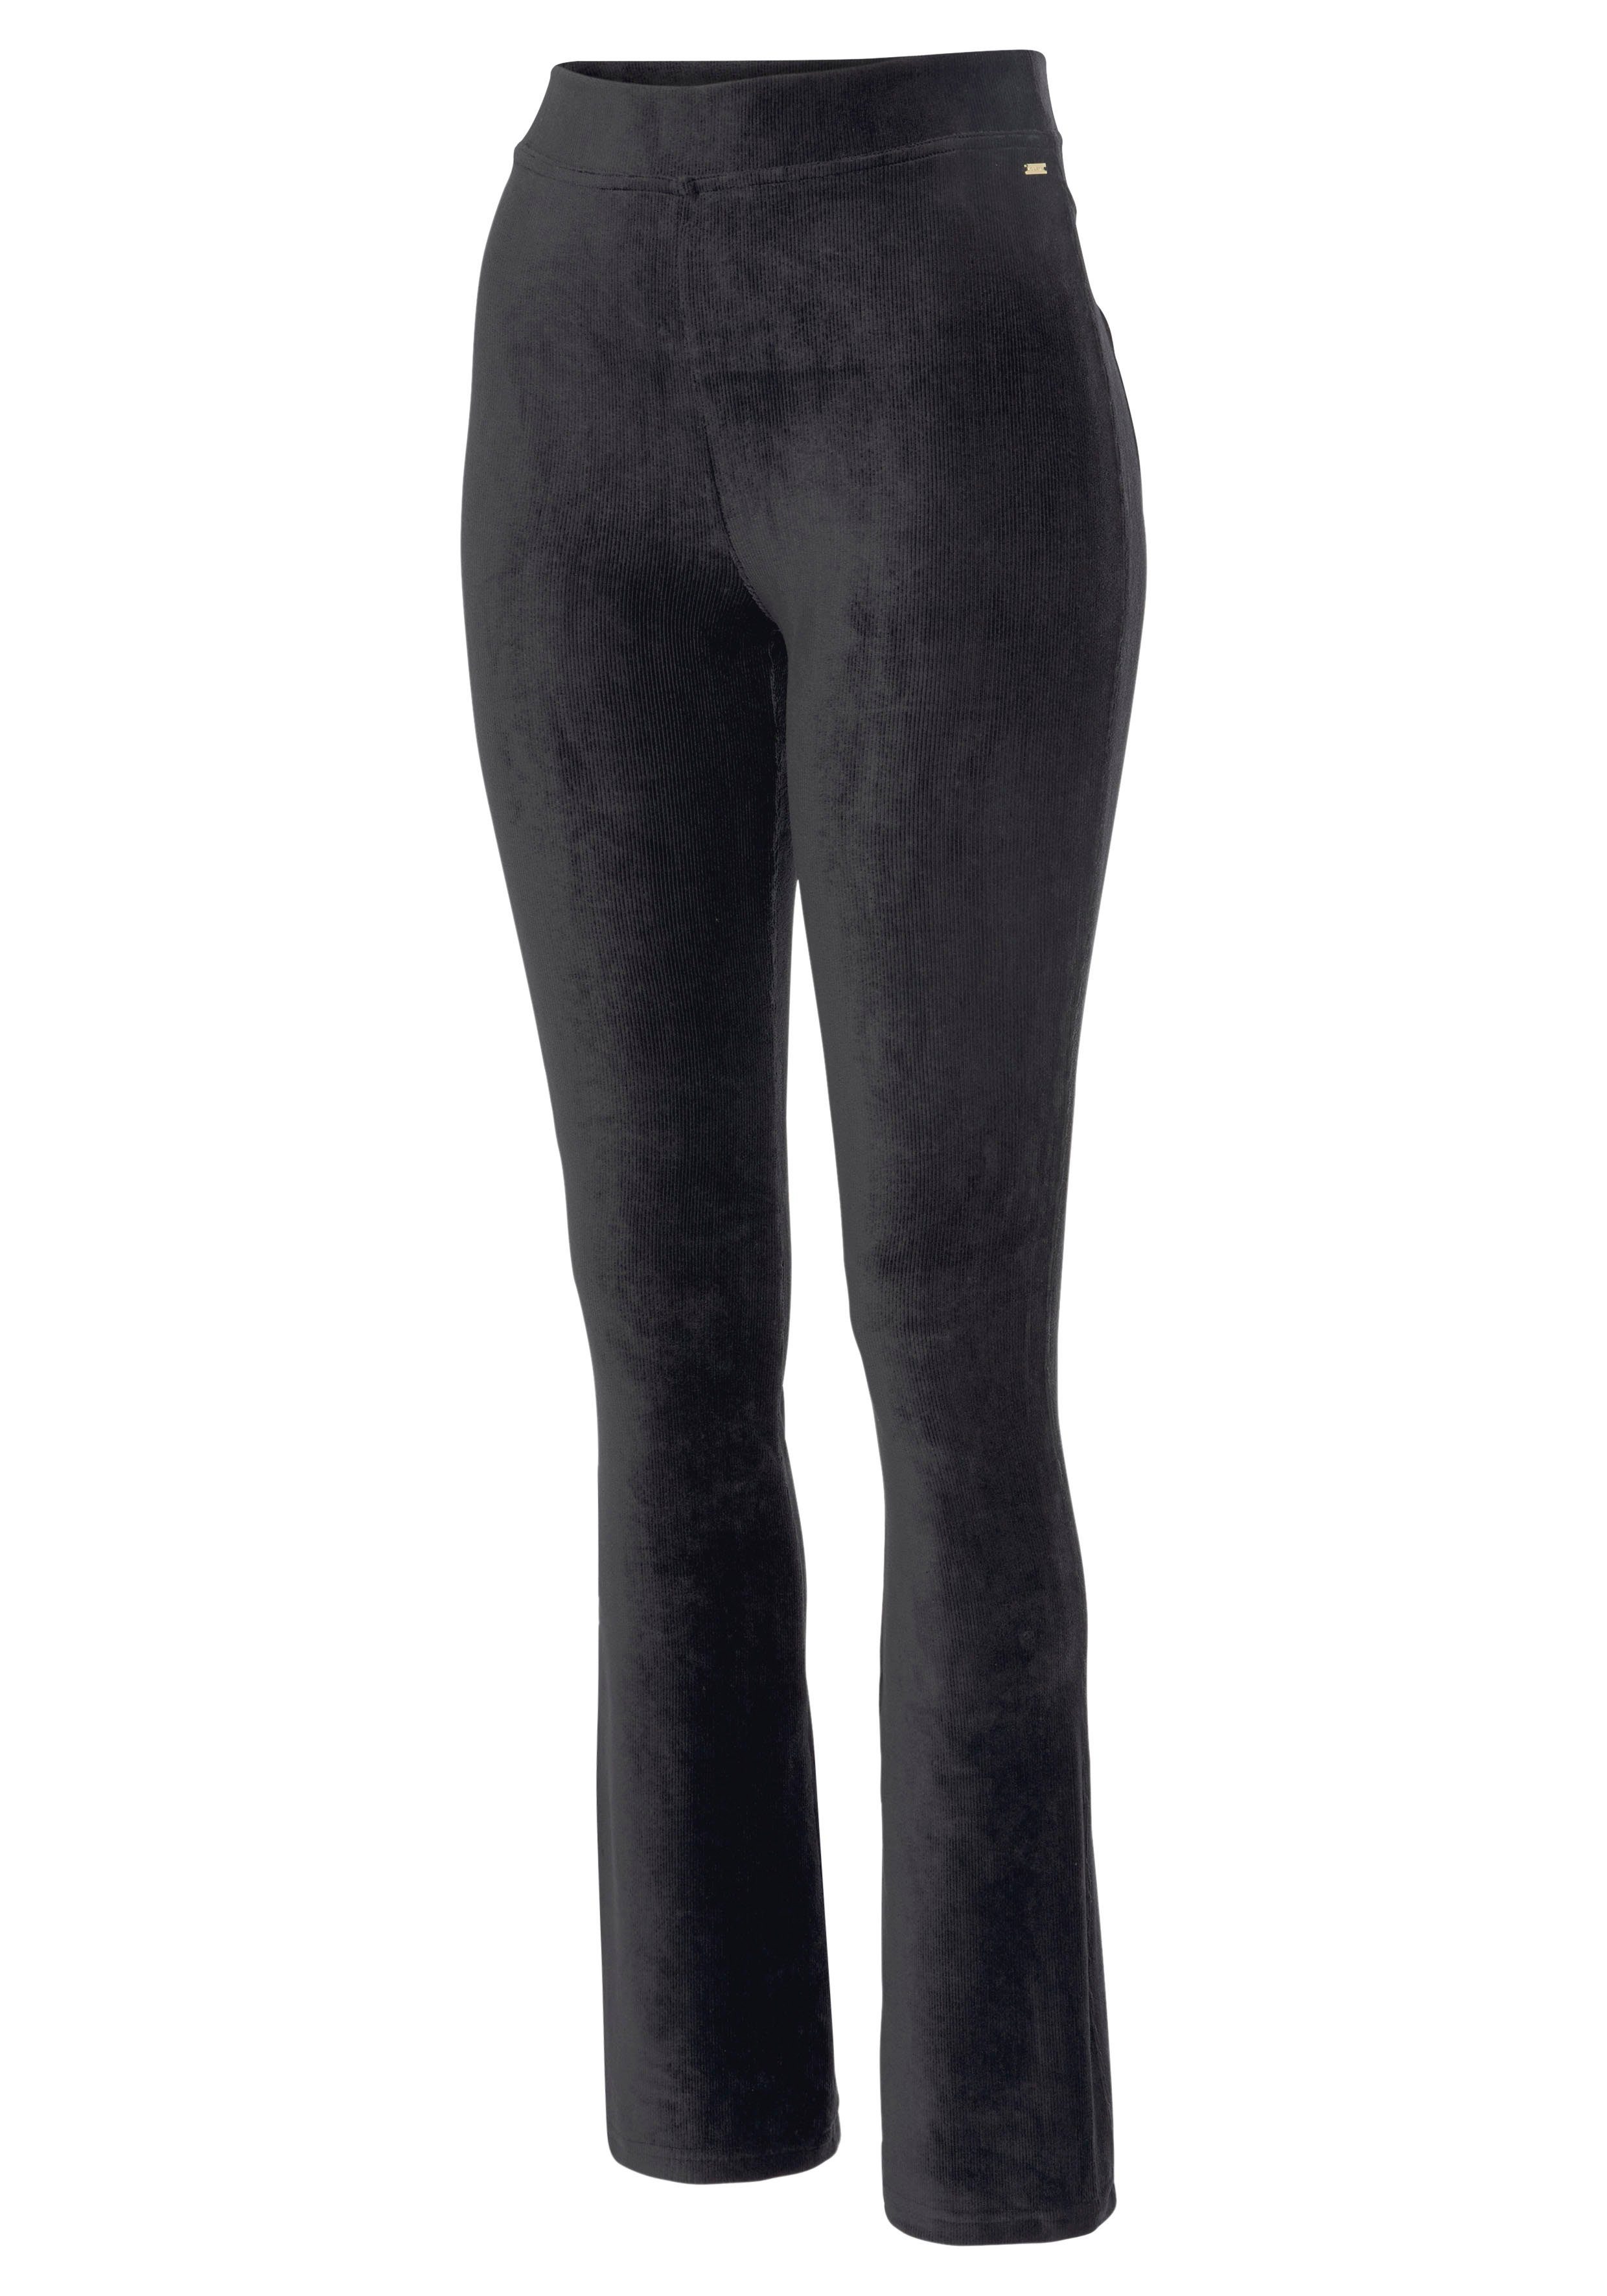 LASCANA Jazzpants aus weichem Cord-Optik, Material in schwarz Loungewear